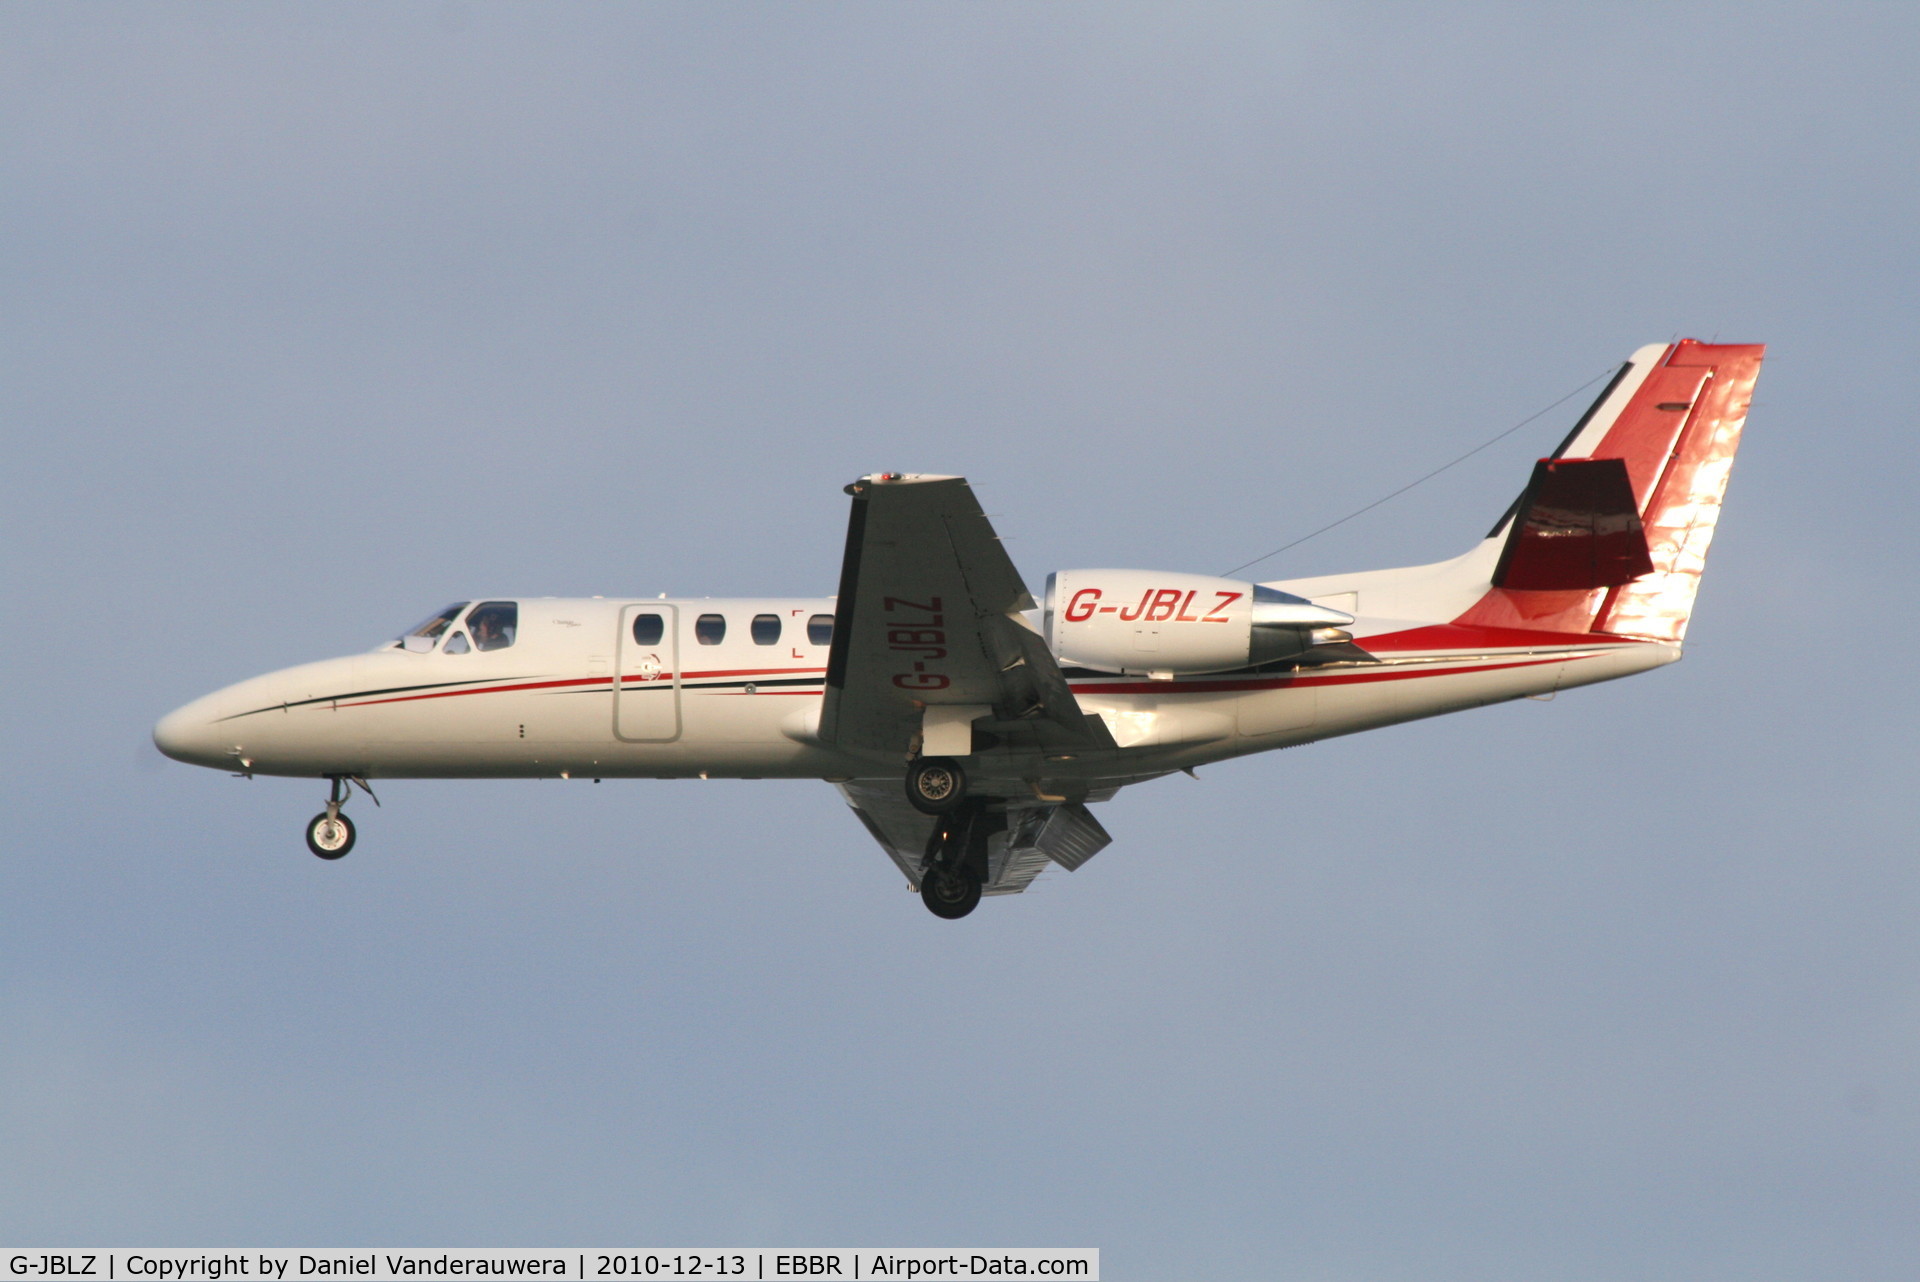 G-JBLZ, 2002 Cessna 550 Citation Bravo C/N 550-1018, Arriving to RWY 25L